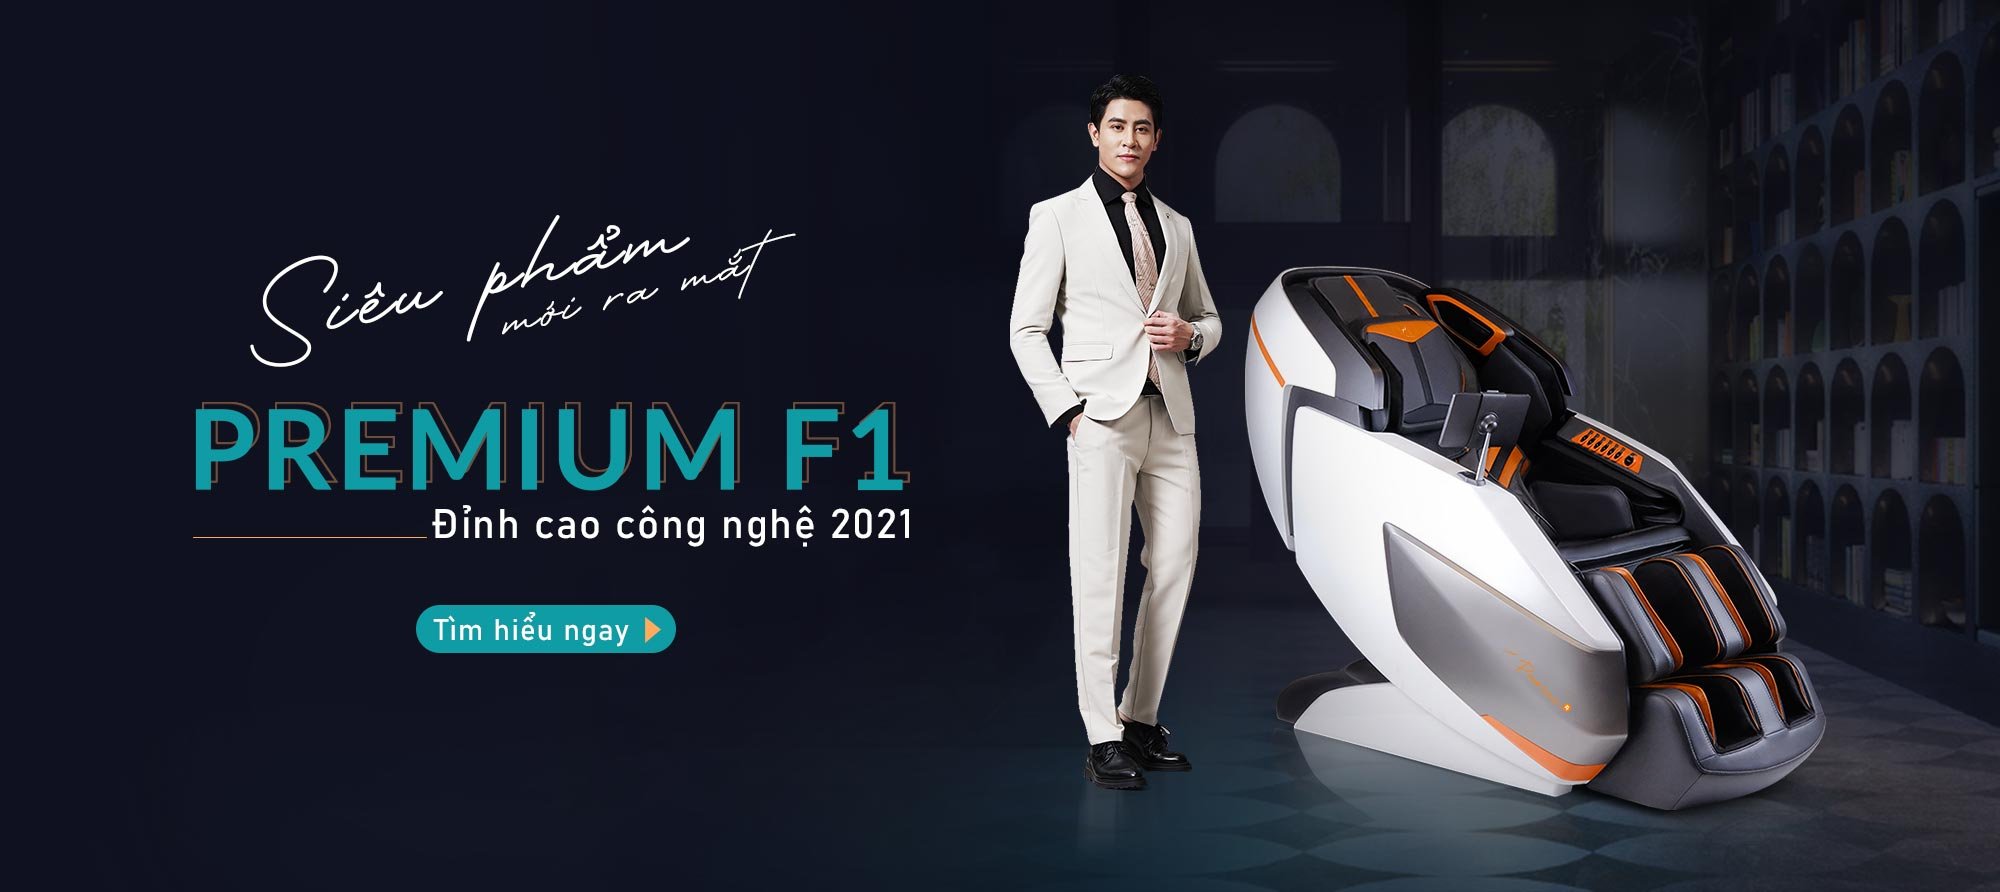 Ra mắt sản phẩm mới Okasa Premium F1